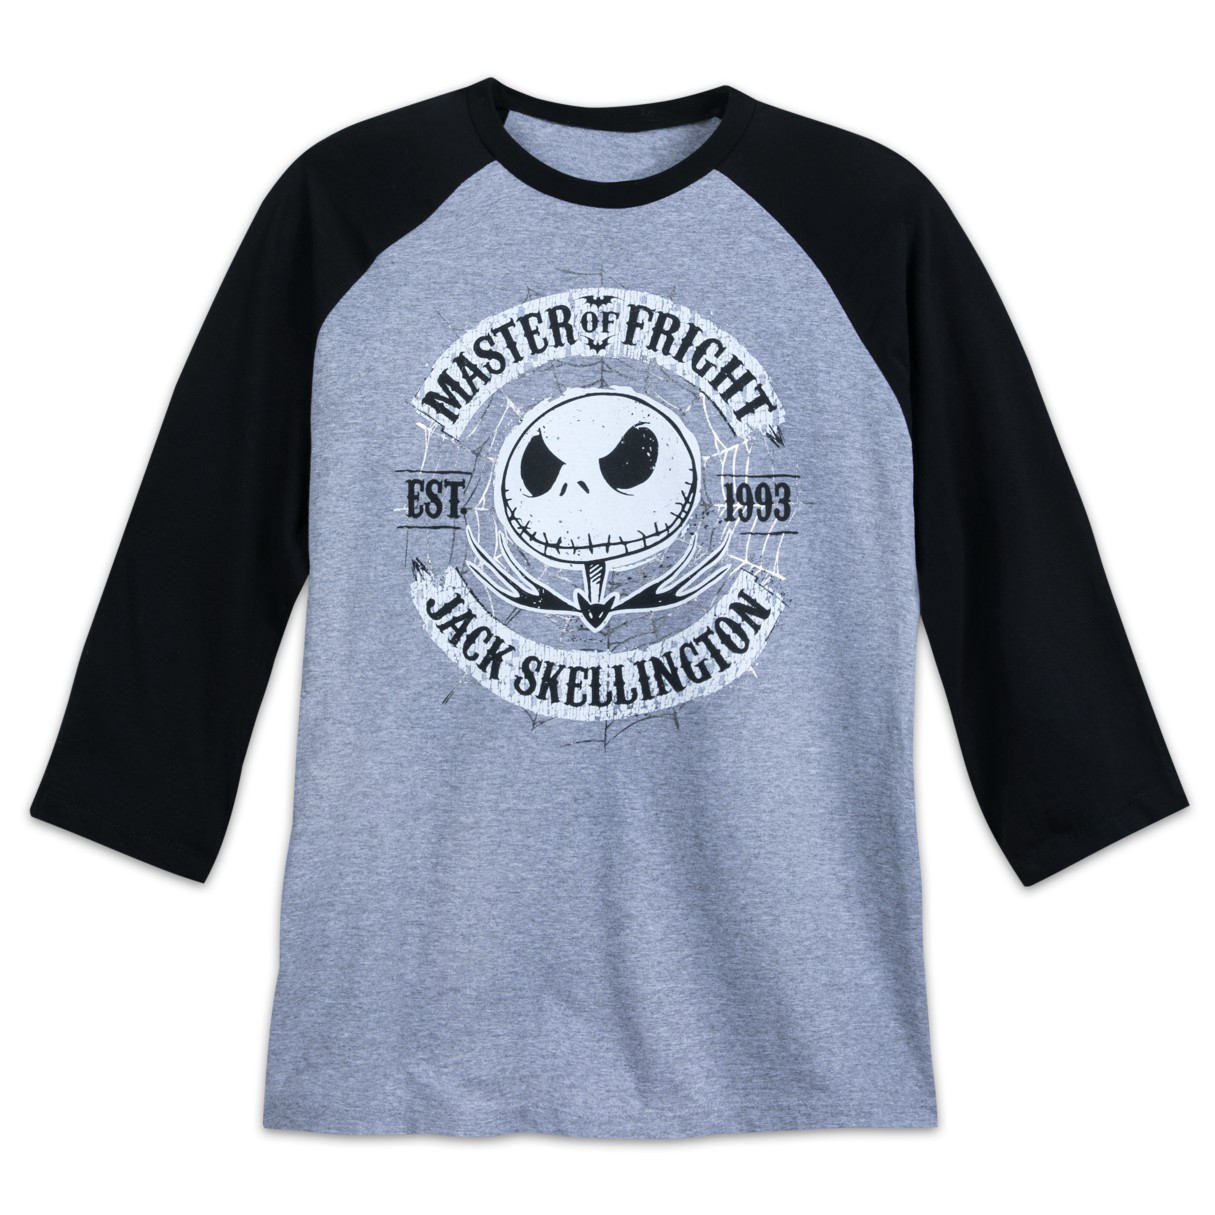 Jack Skellington Baseball T-Shirt for Adults